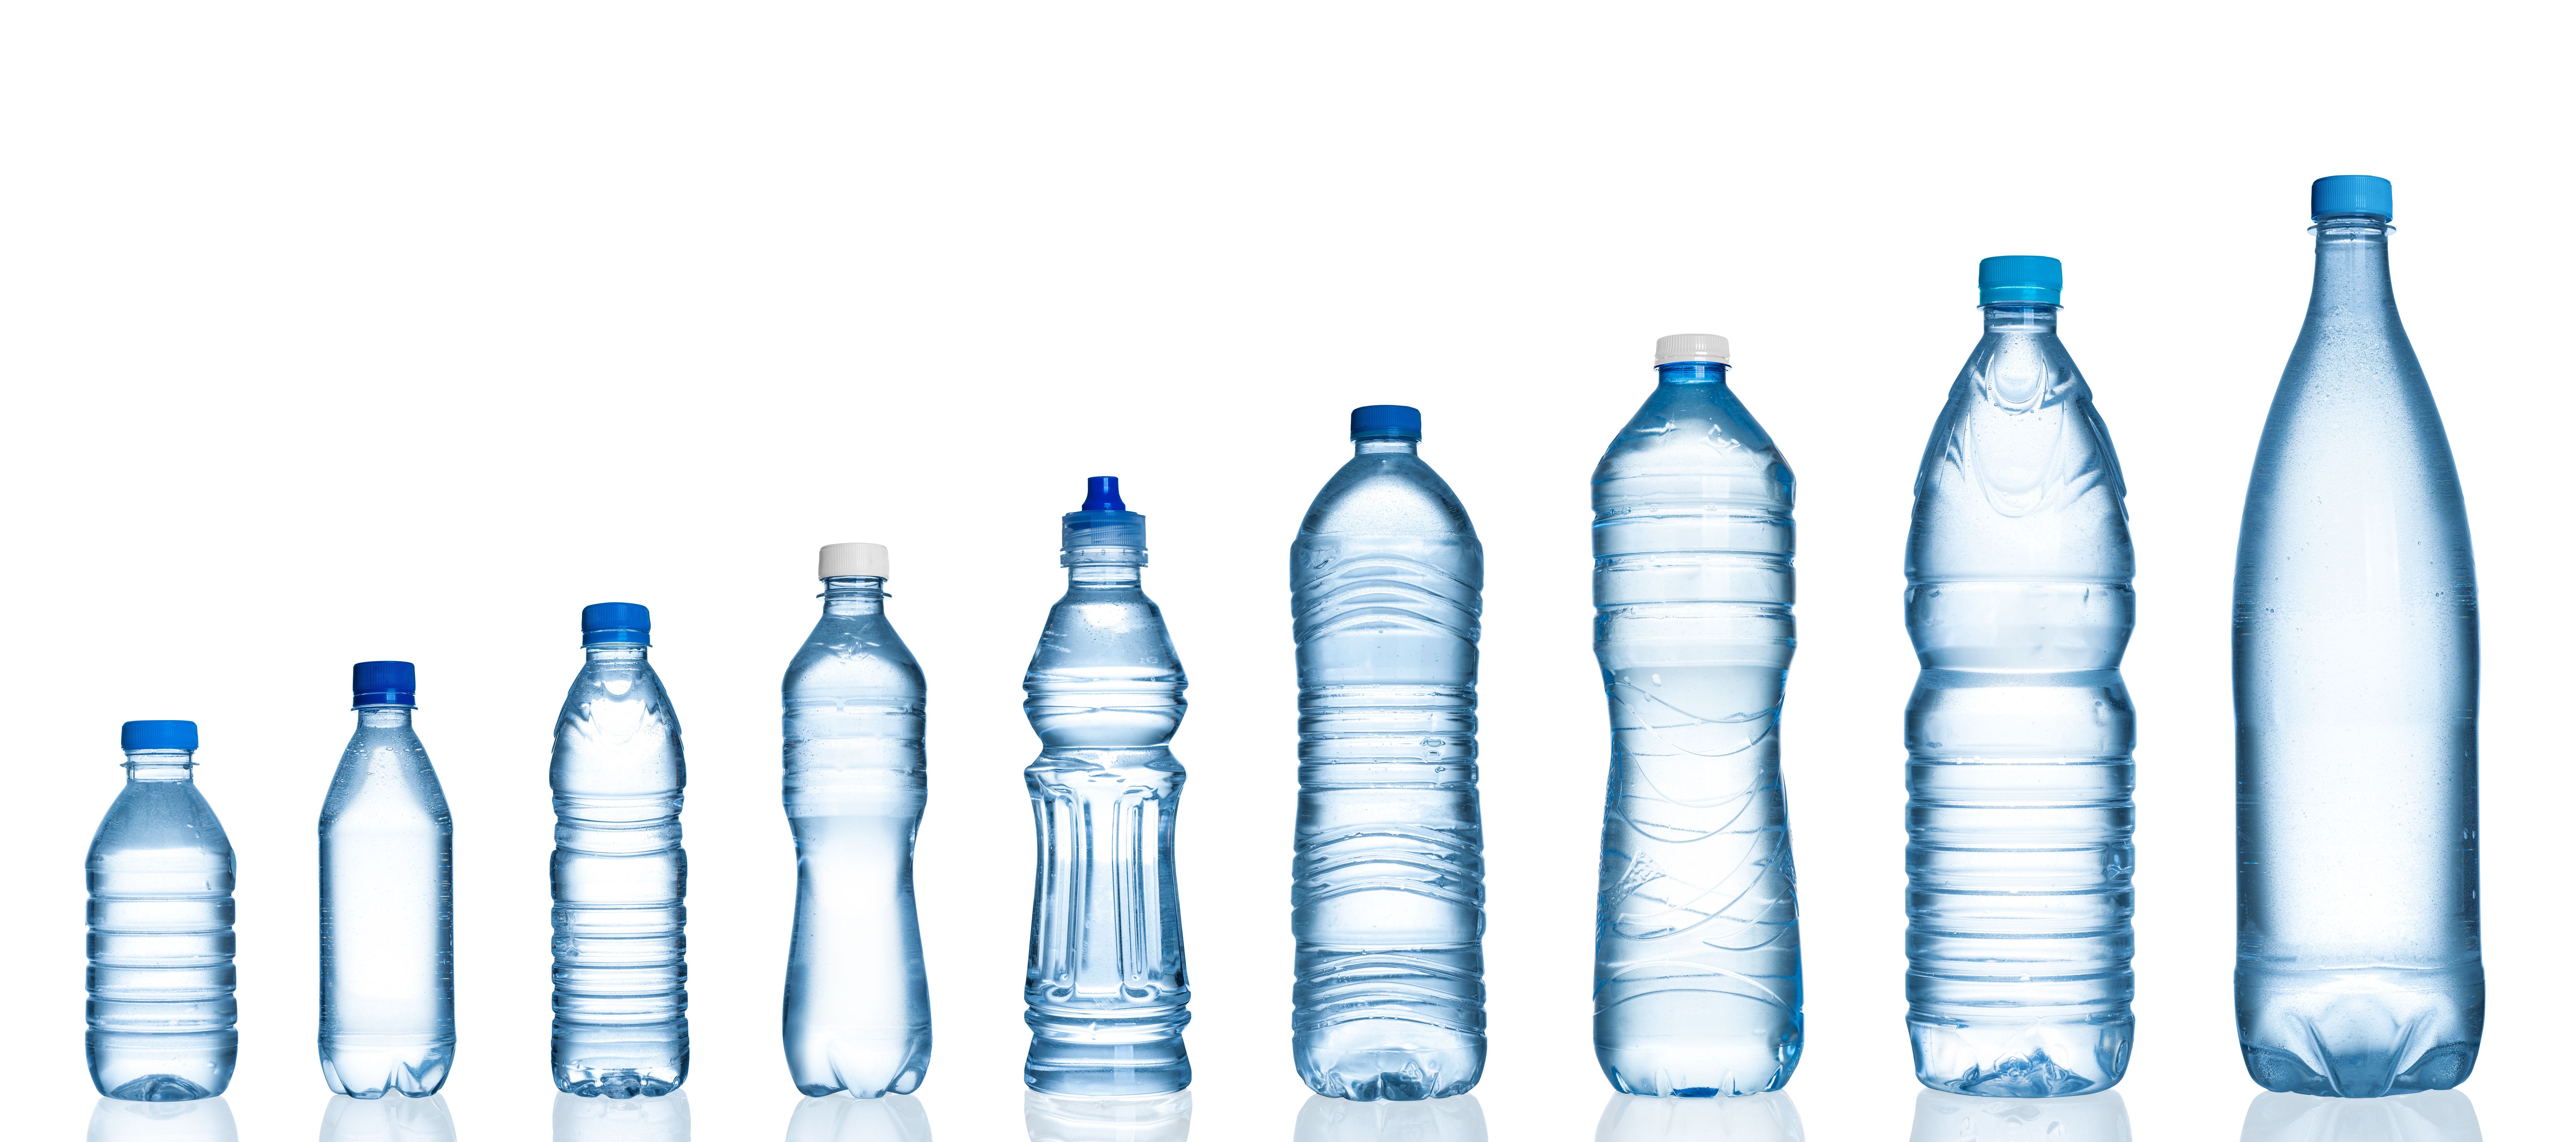 Бутылка снизу. Пластиковая бутылка. Бутылка пустая ПЭТ. Первая пластиковая бутылка. Пластиковые бутылки от минеральной воды.